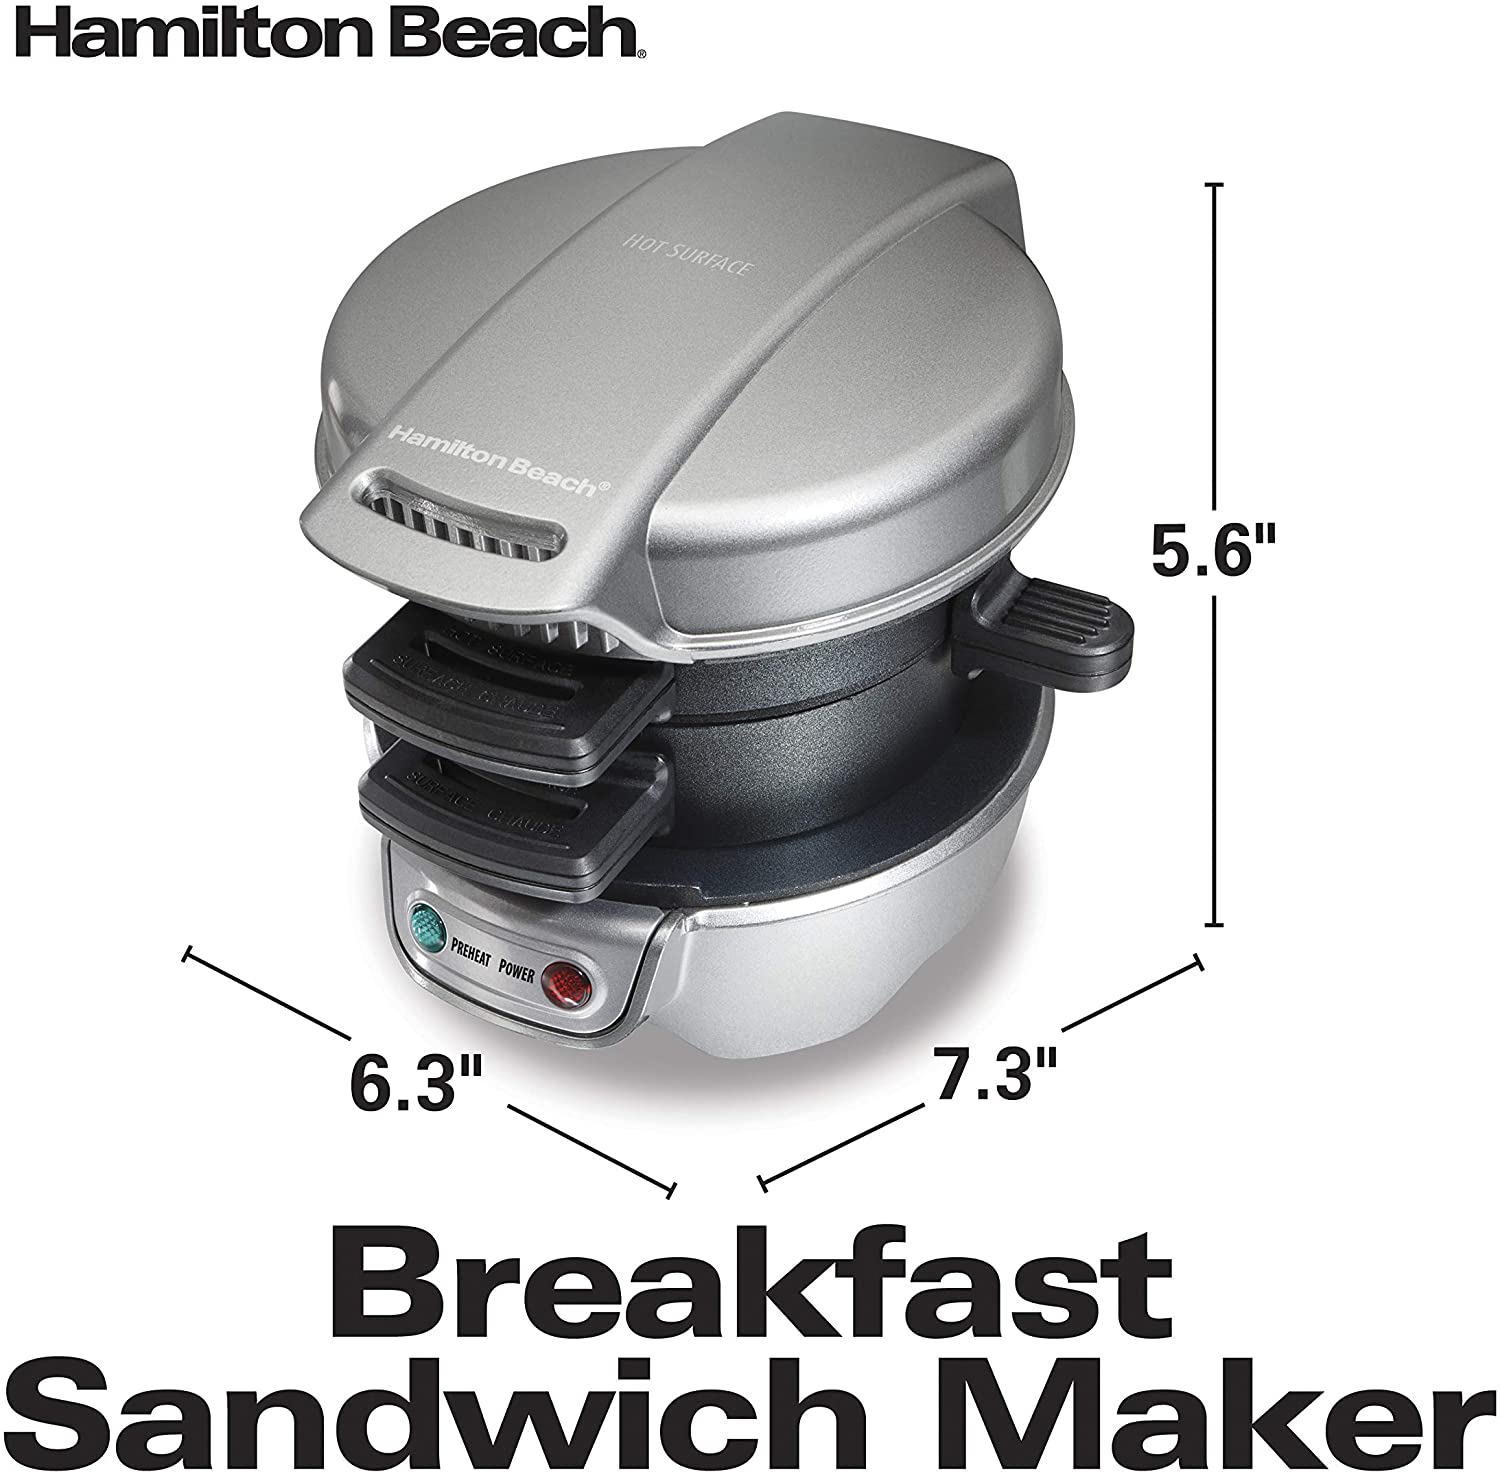 Parrilla Eléctrica Hamilton Beach Breakfast Sandwich Maker - Gris